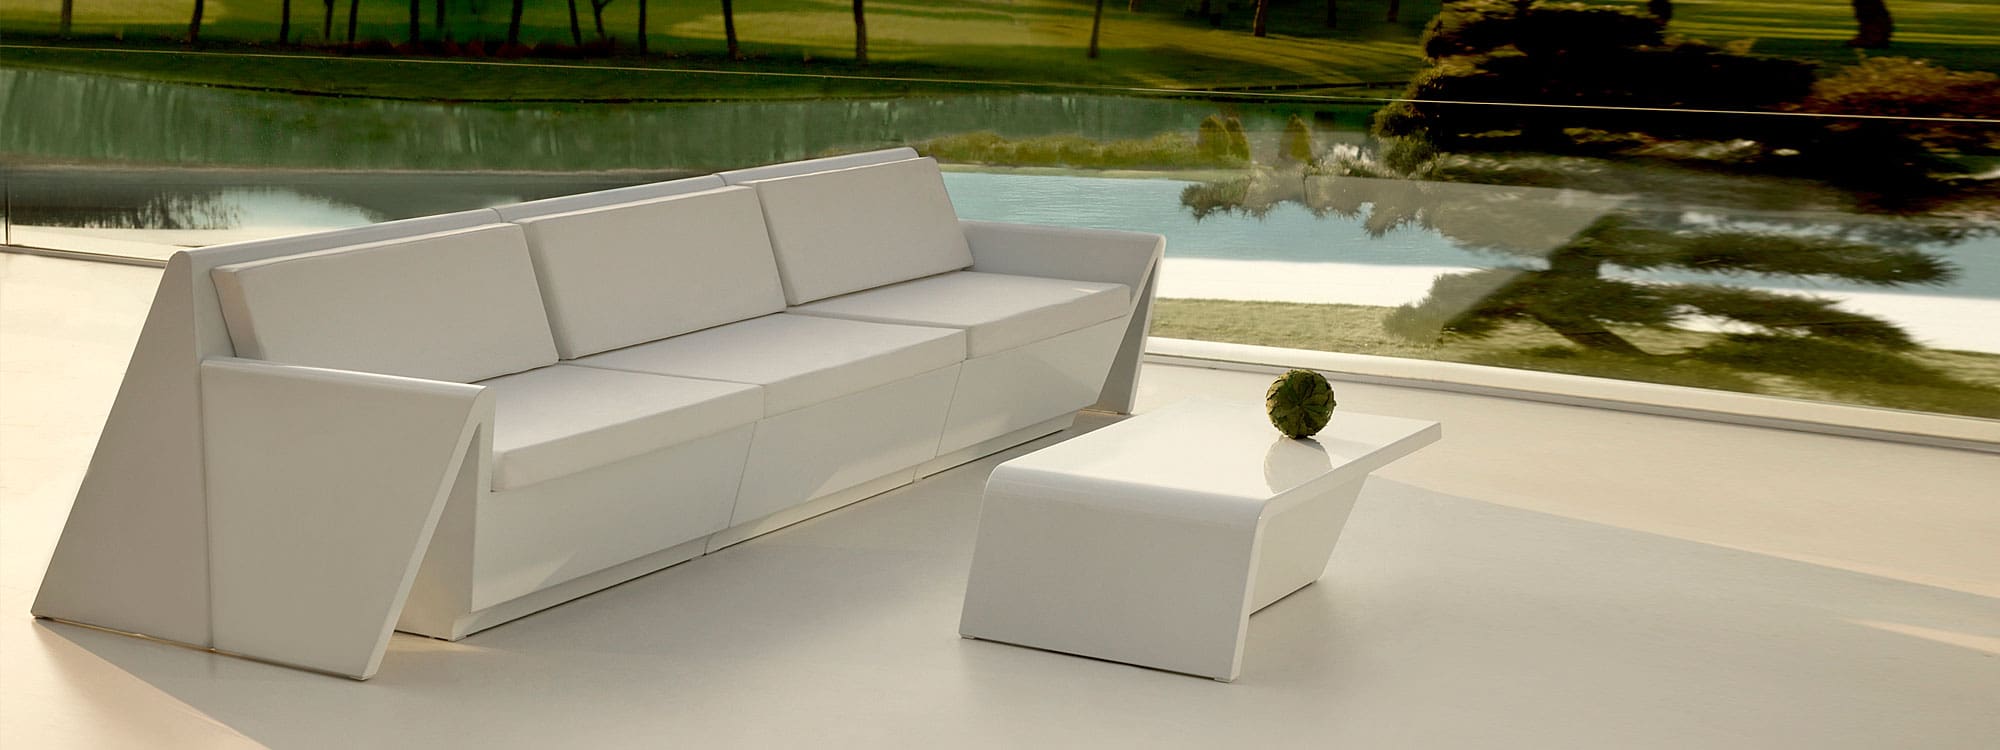 Image of Vondom Rest modern 3 seat garden sofa in white polyethylene on minimalist terrace at dusk